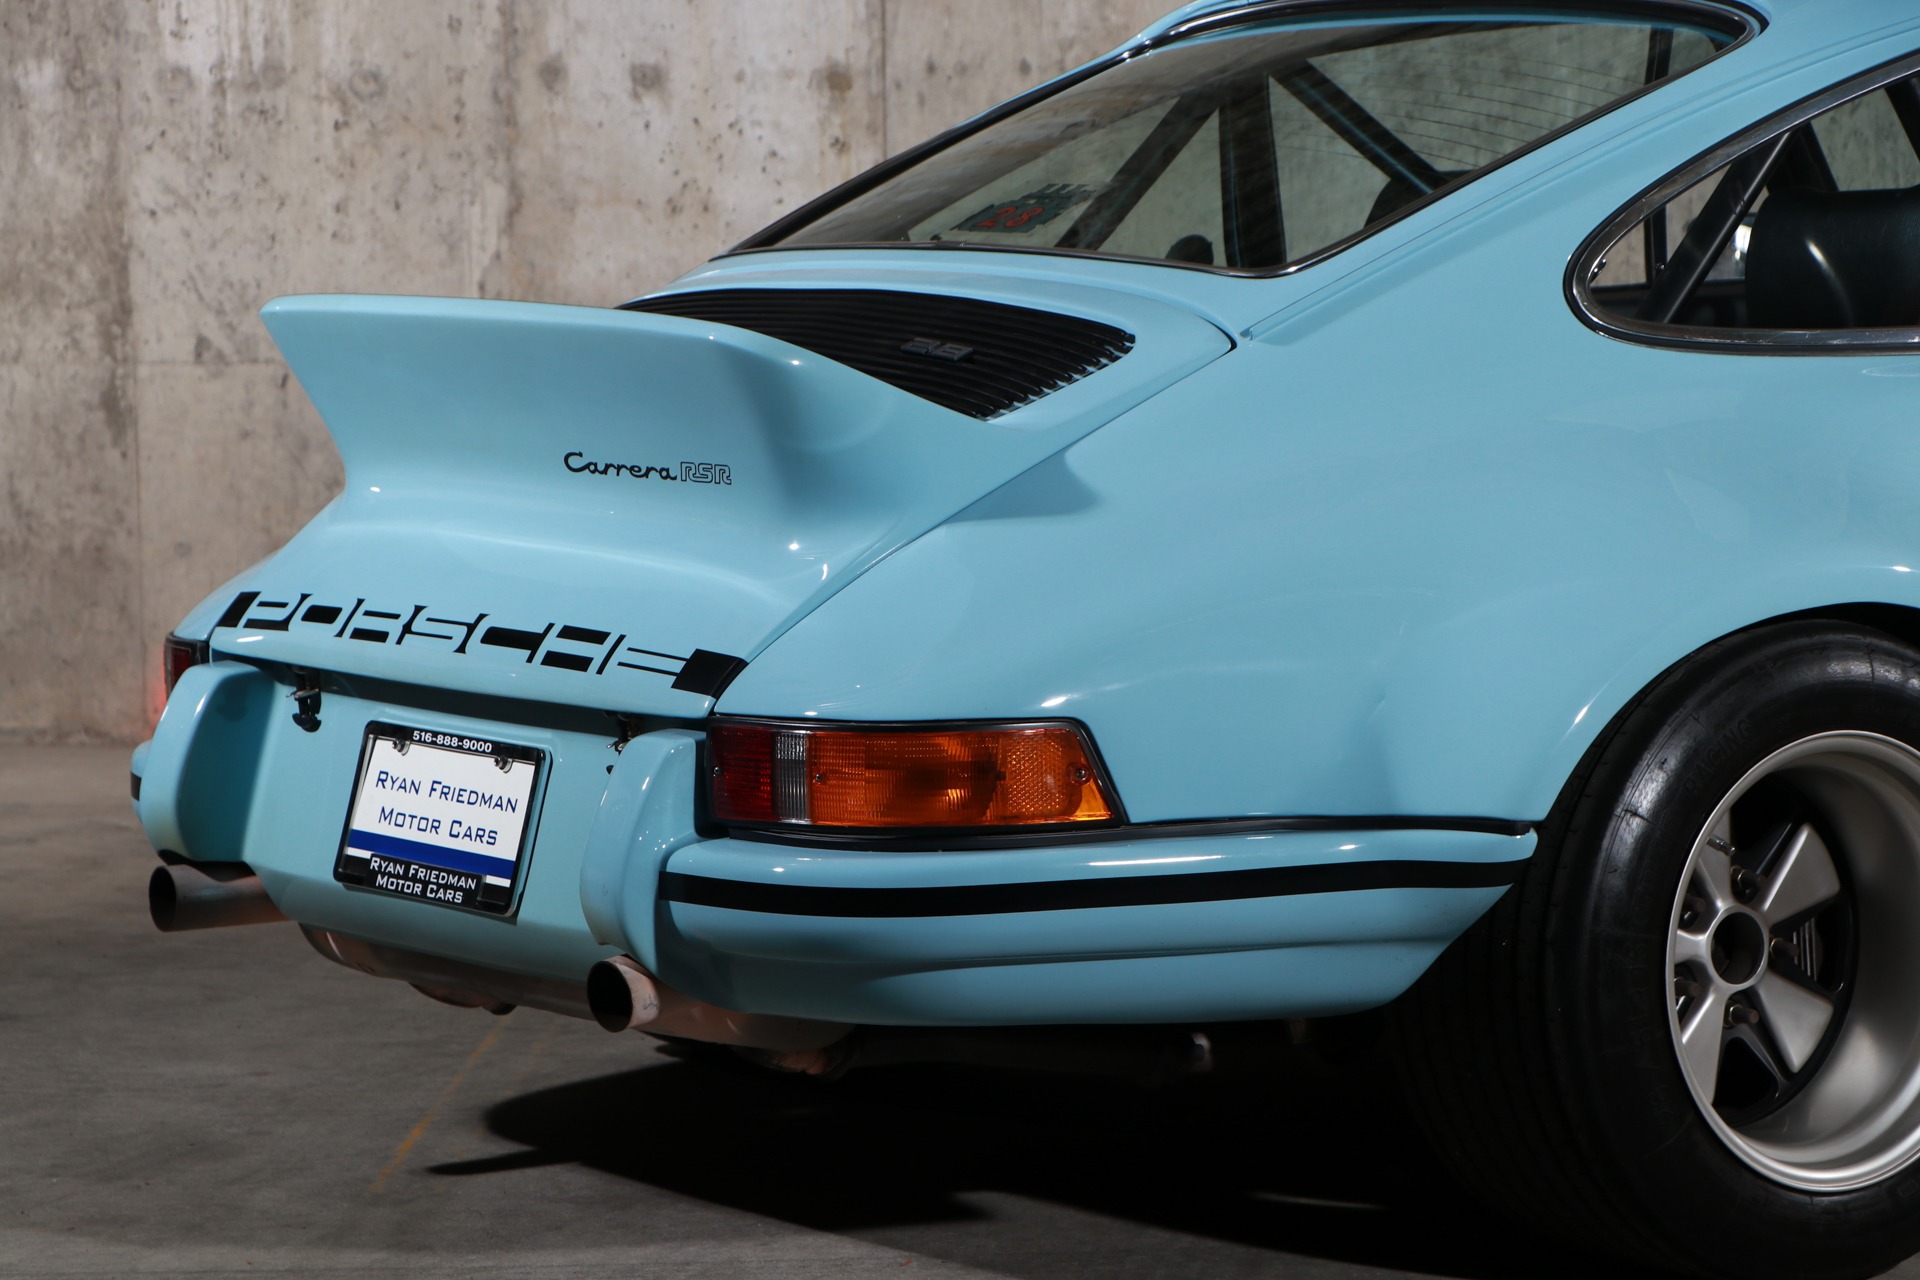 Used 1973 Porsche 911 RSR For Sale ($299,995) | Ryan Friedman Motor Cars  LLC Stock #922